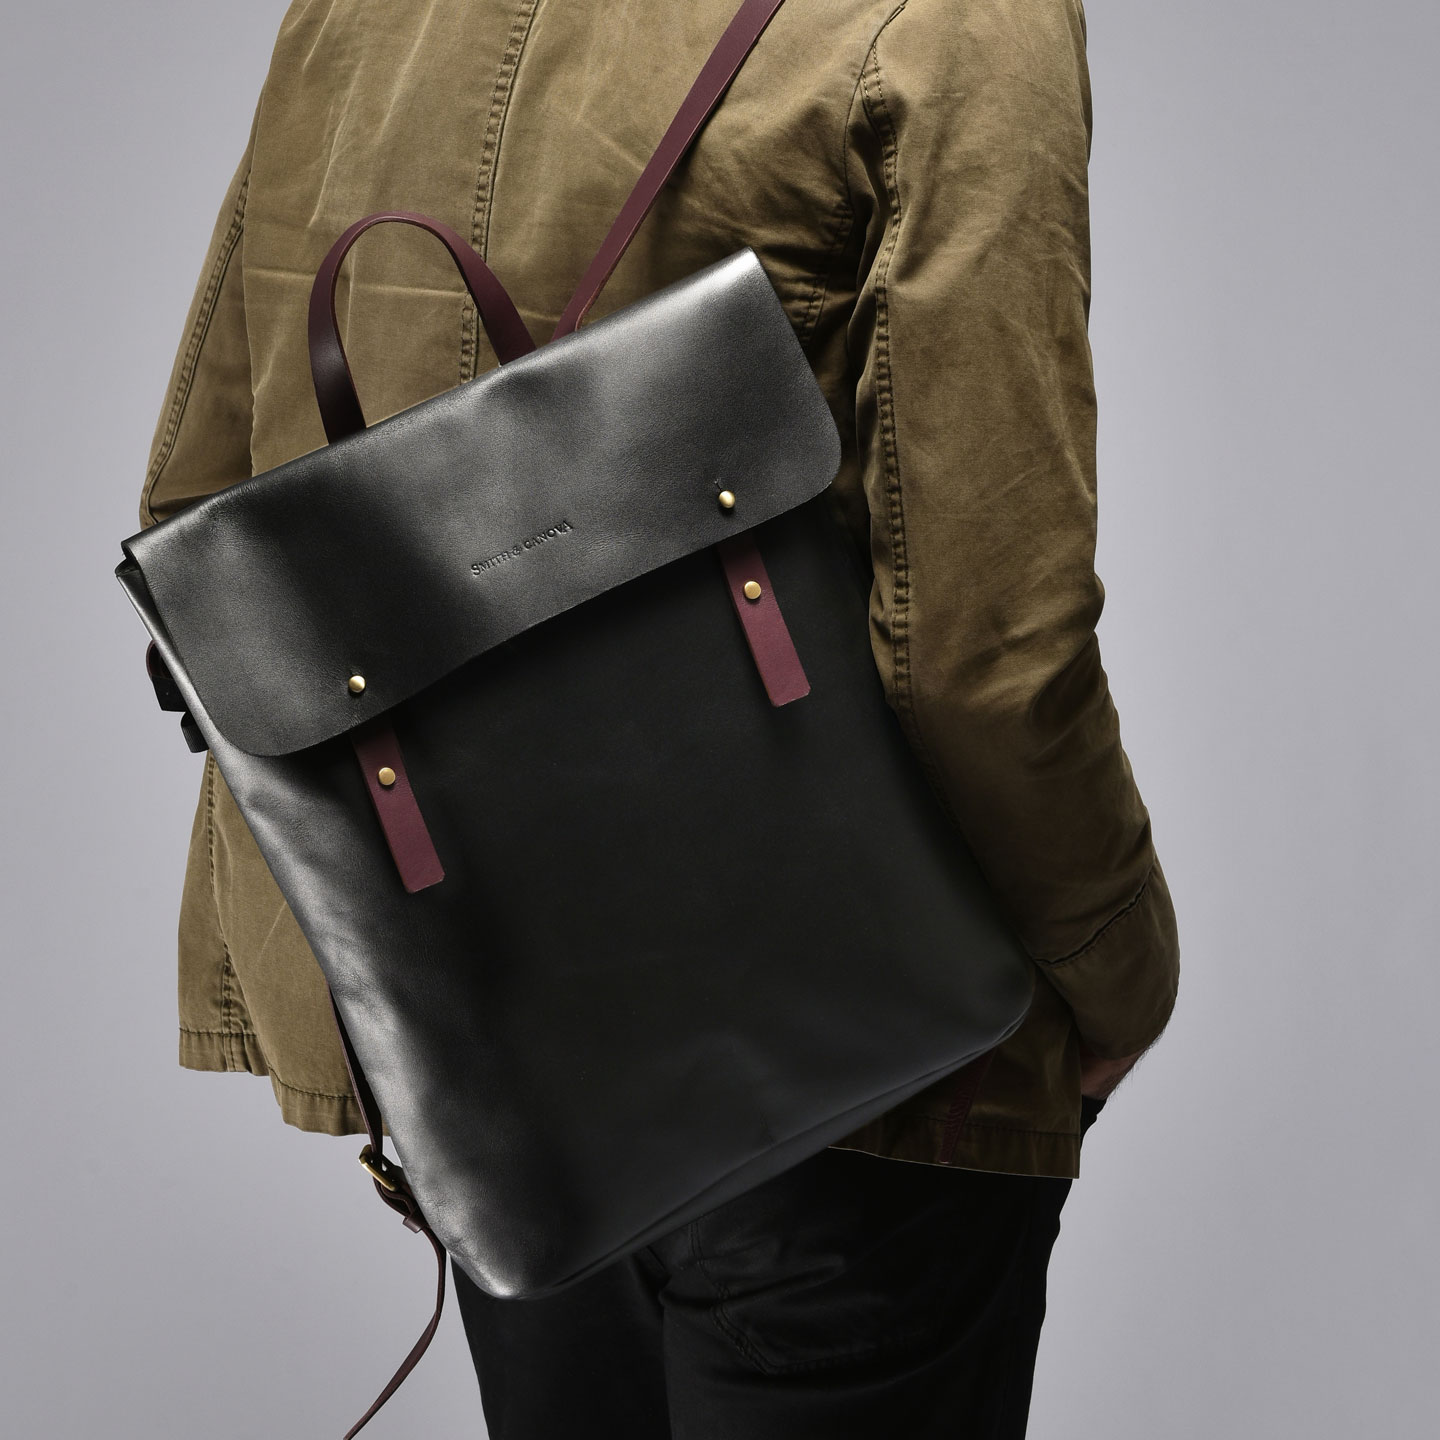 Handbags, Purses, Hip Flasks - Smith & Canova